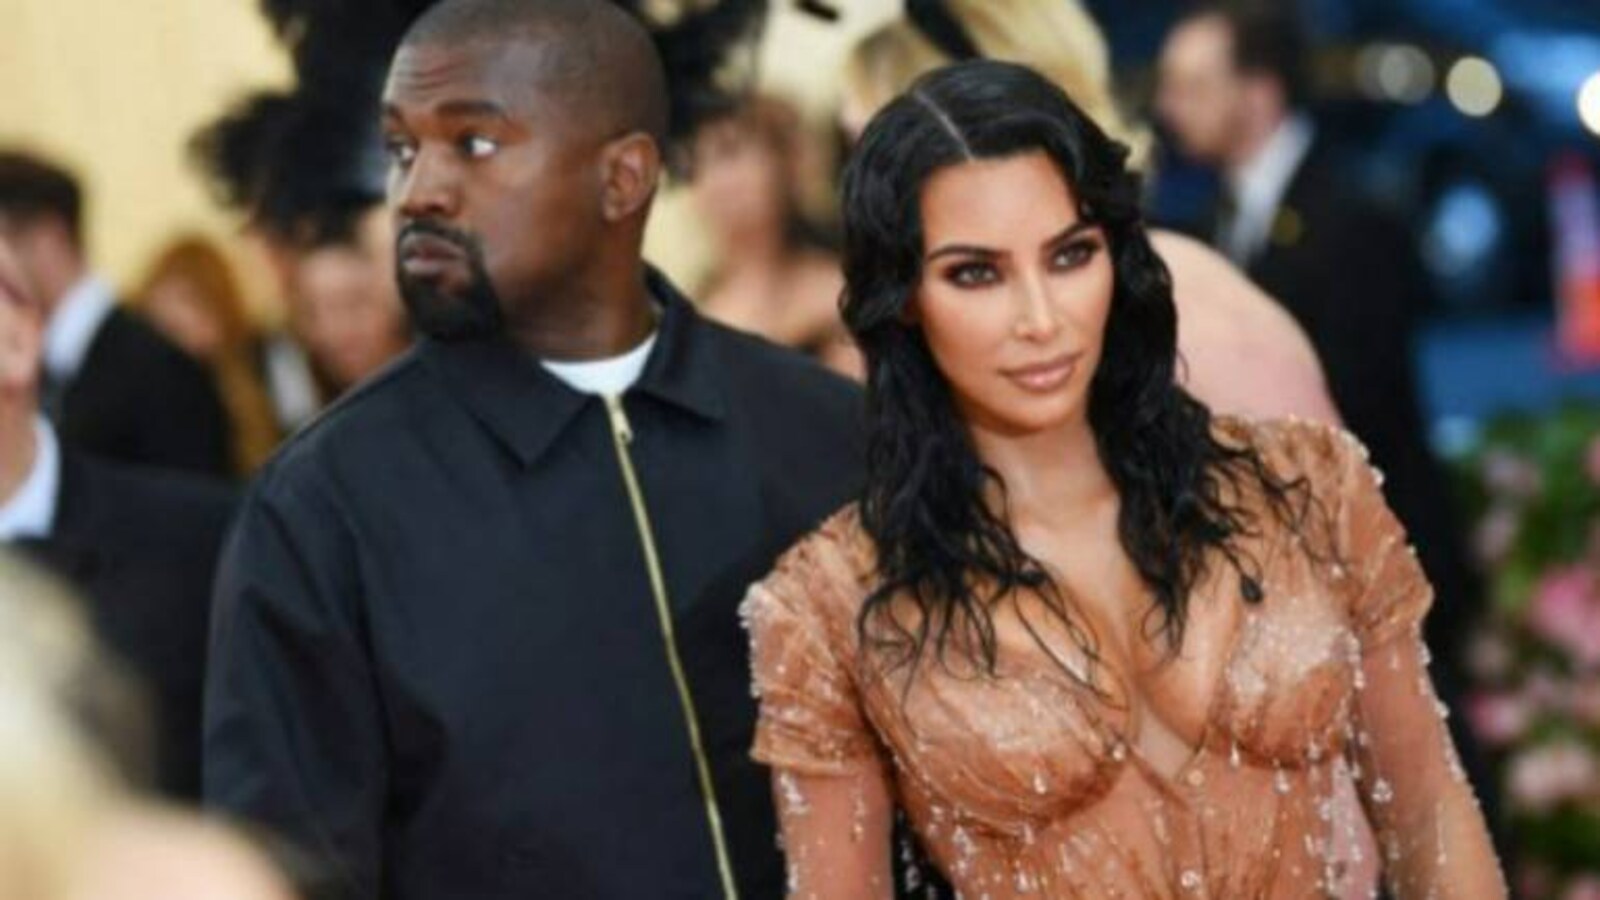 Hd Xxx Kim Kardashian 2018 - Kanye West showed explicit photos of Kim Kardashian to Adidas employees:  Report